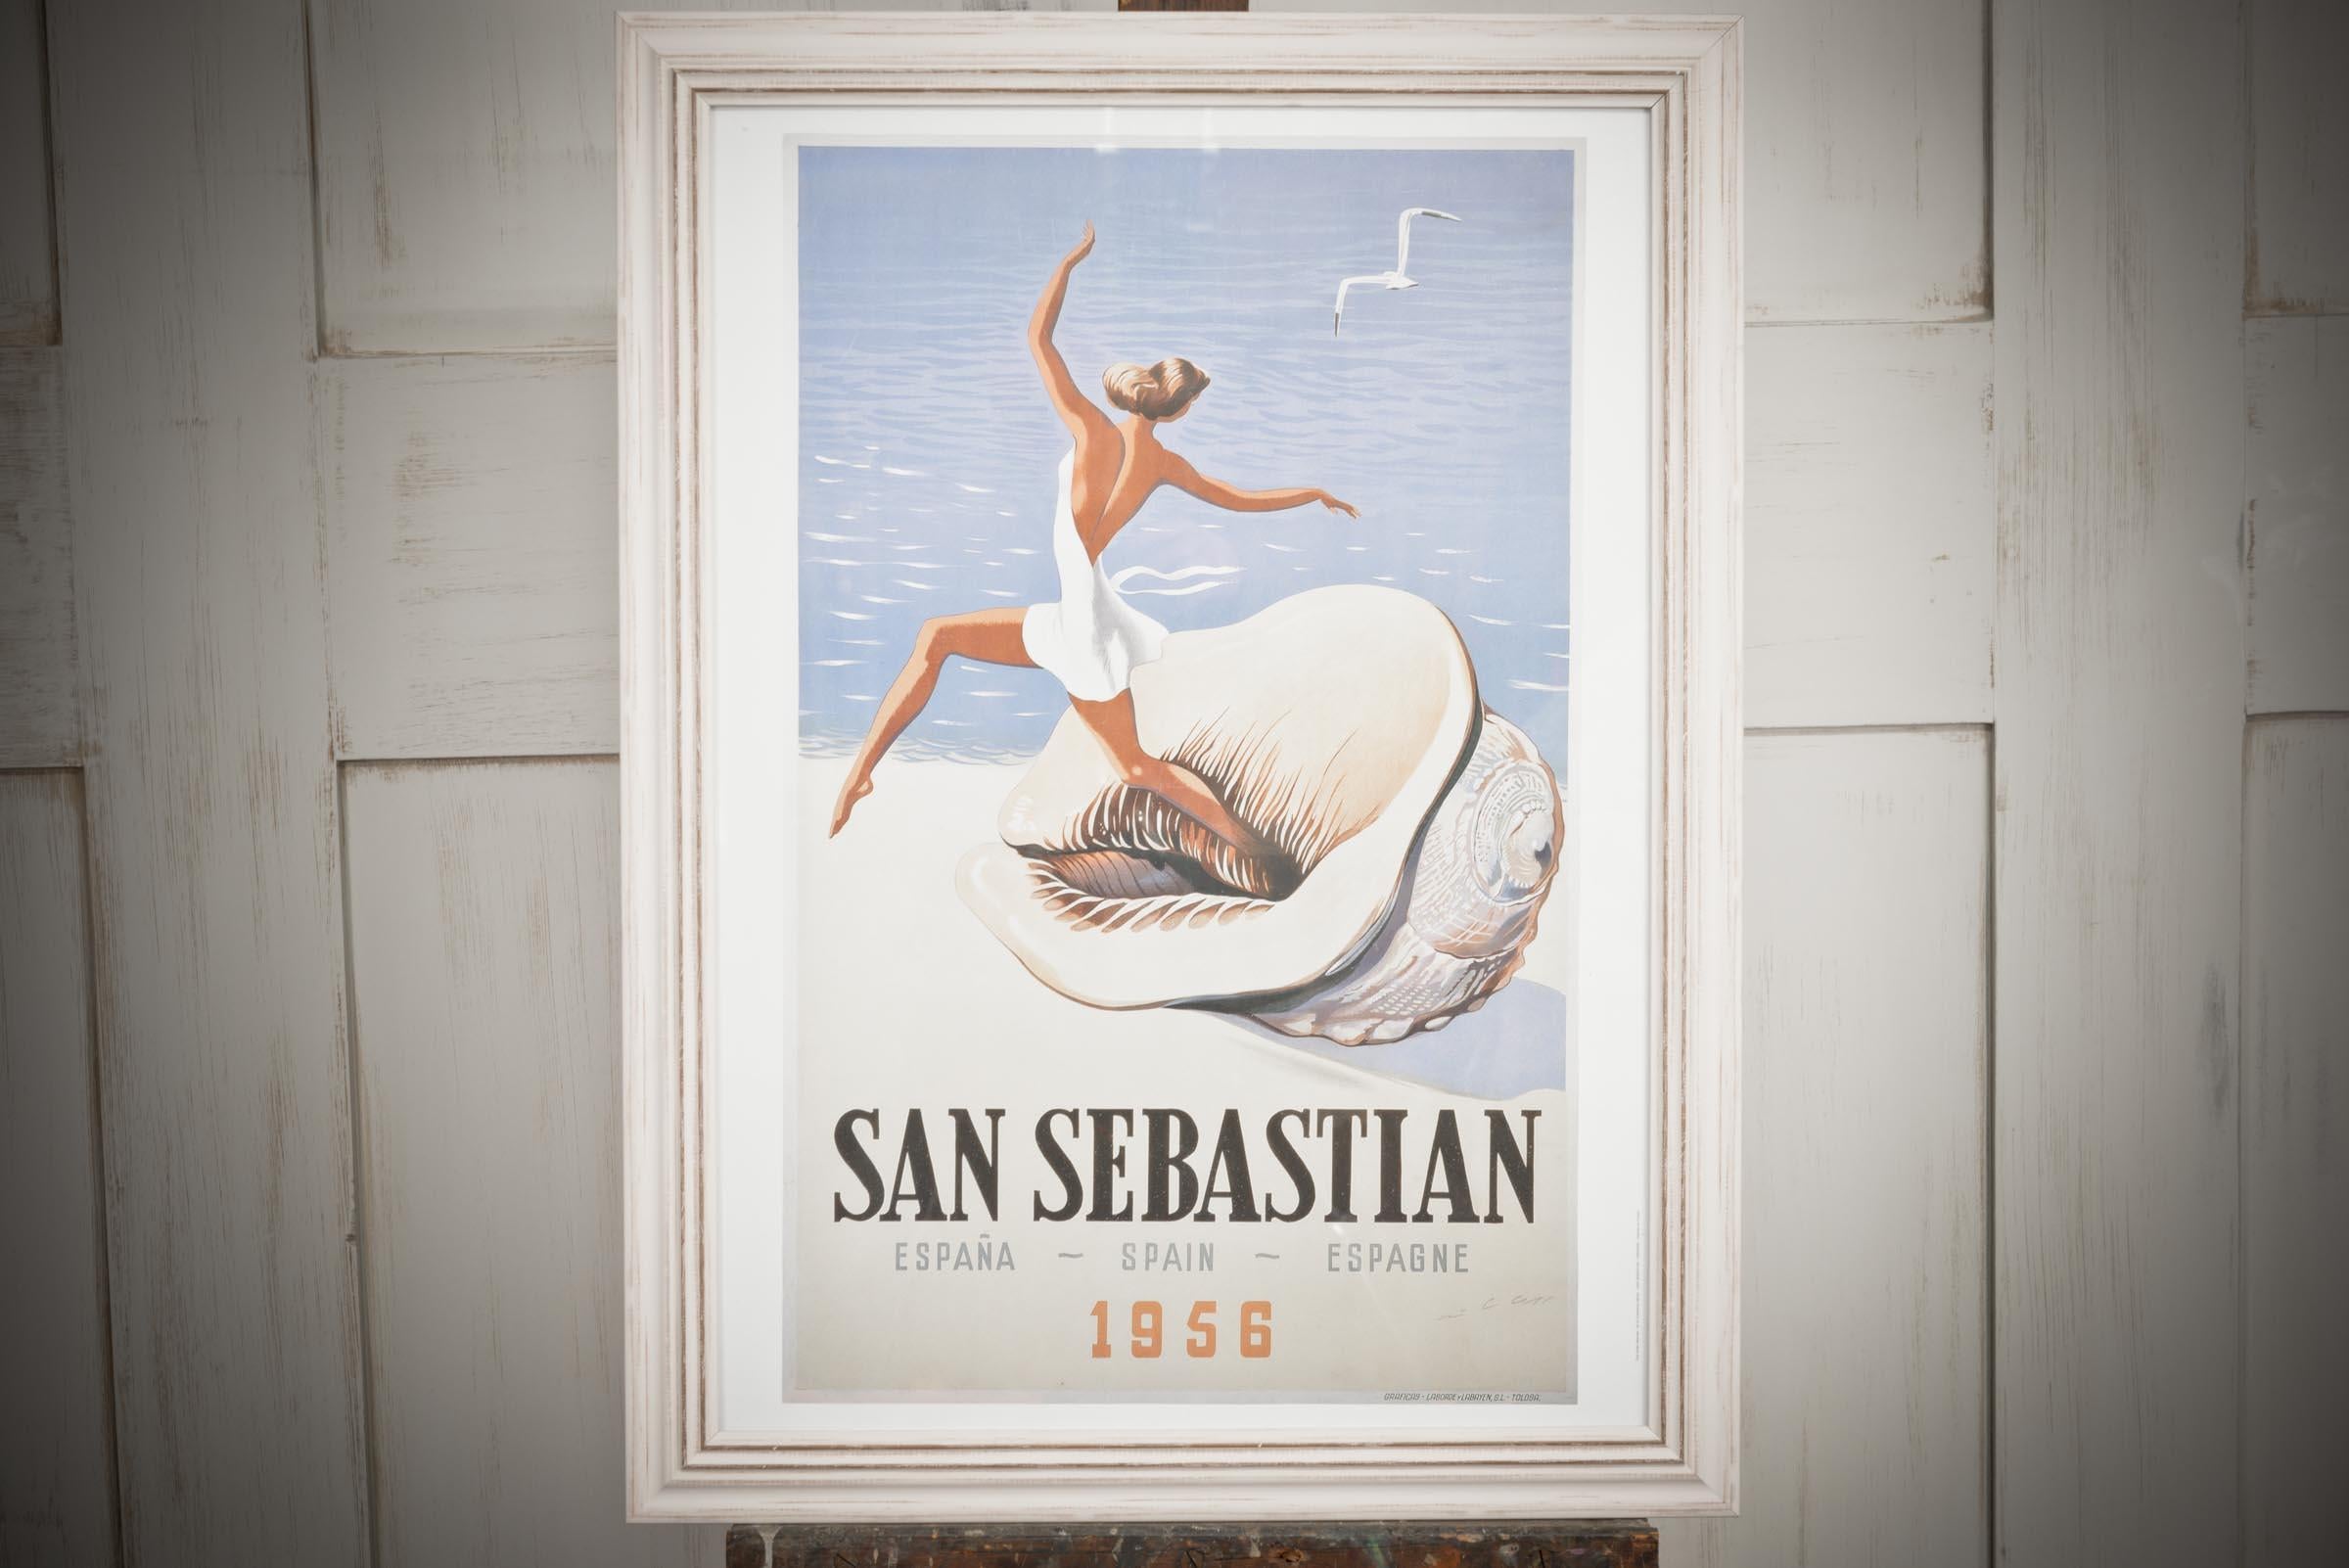 Gerahmtes San Sabastian-Plakat (Spanisch) im Angebot